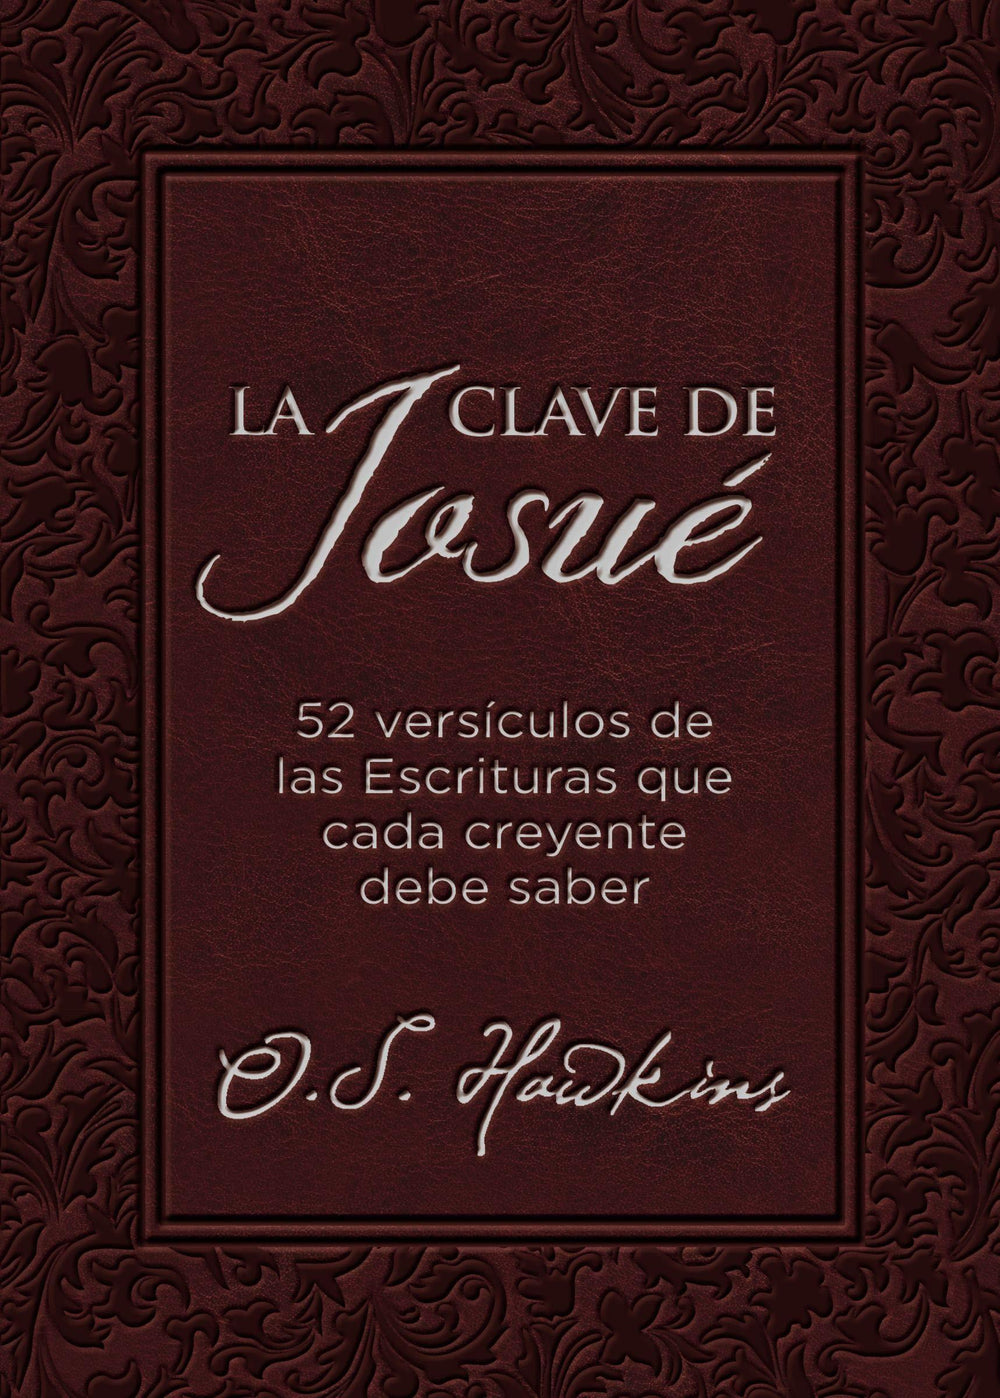 La clave de Josue- O.S. Hawkins - Pura Vida Books